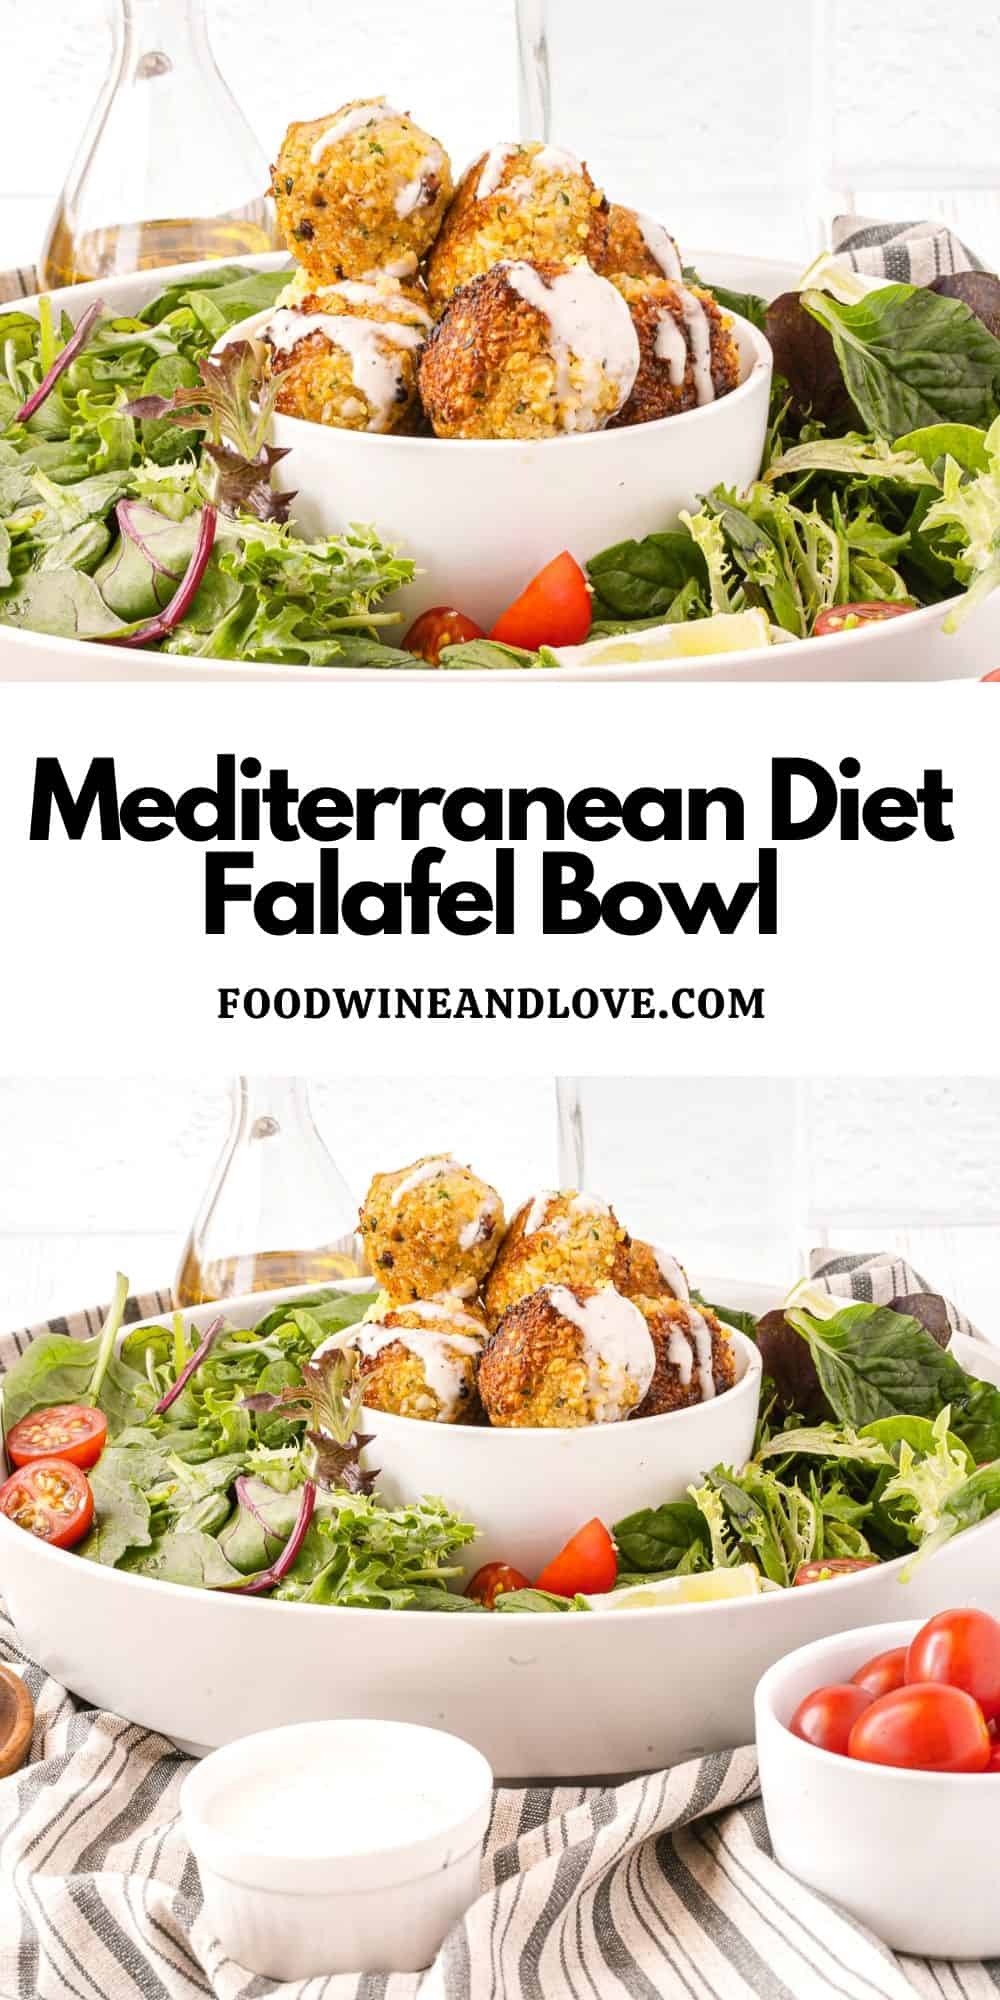 Mediterranean Diet Falafel Bowl